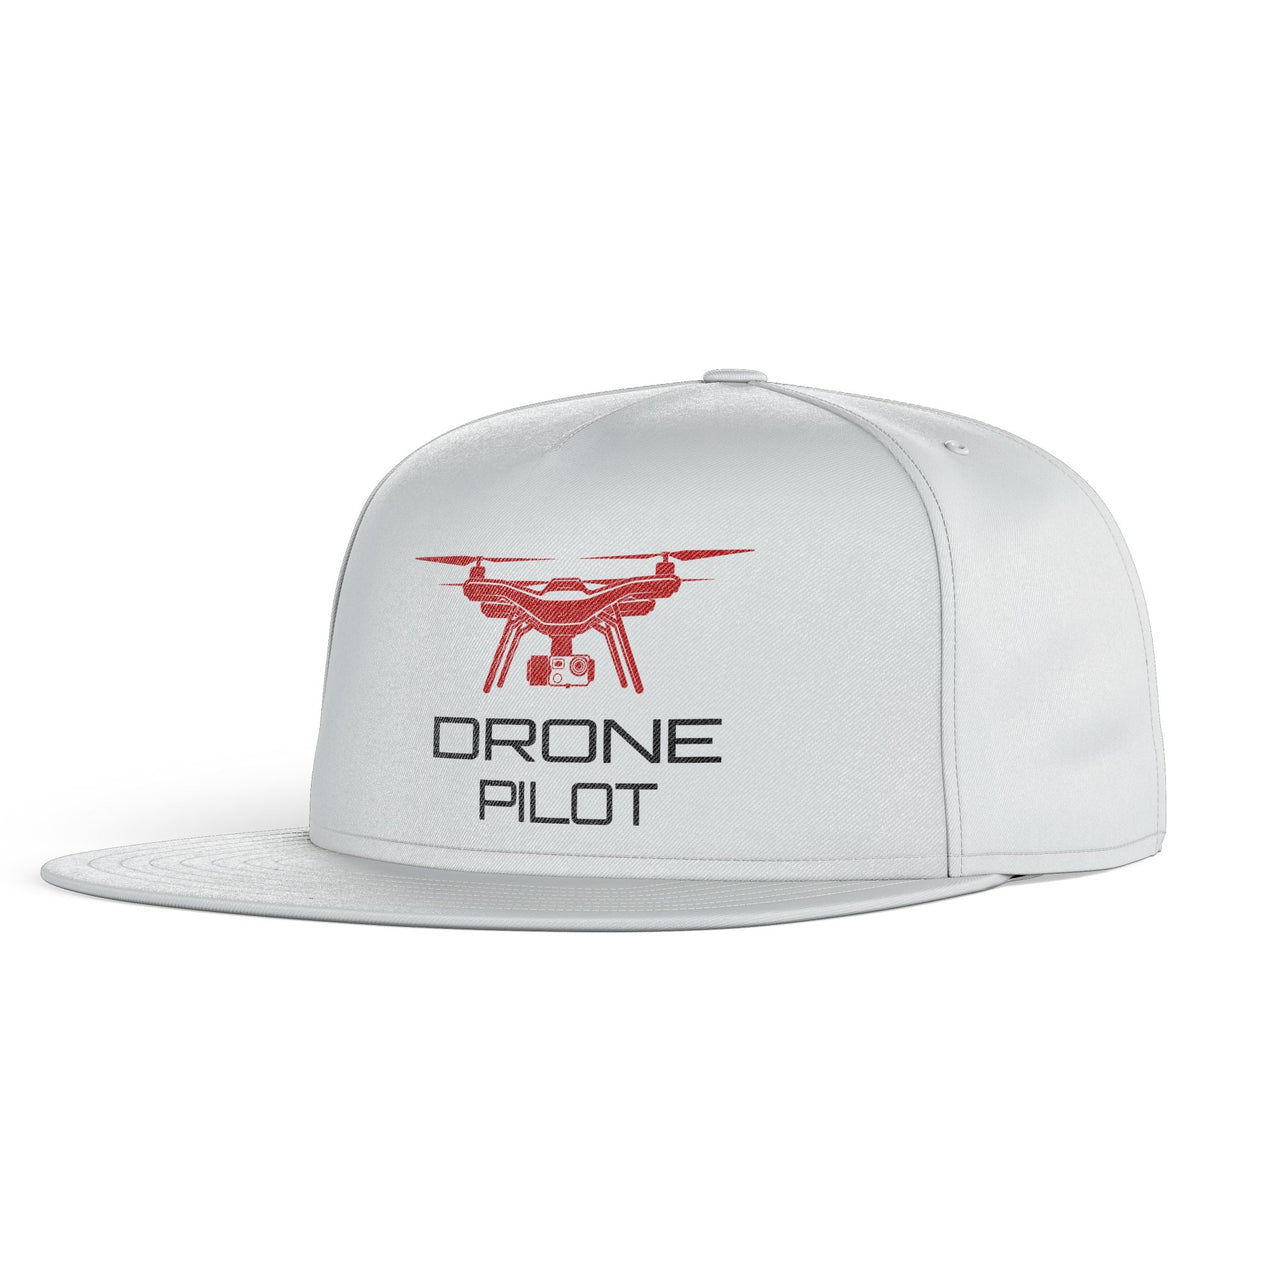 Drone Pilot Designed Snapback Caps & Hats